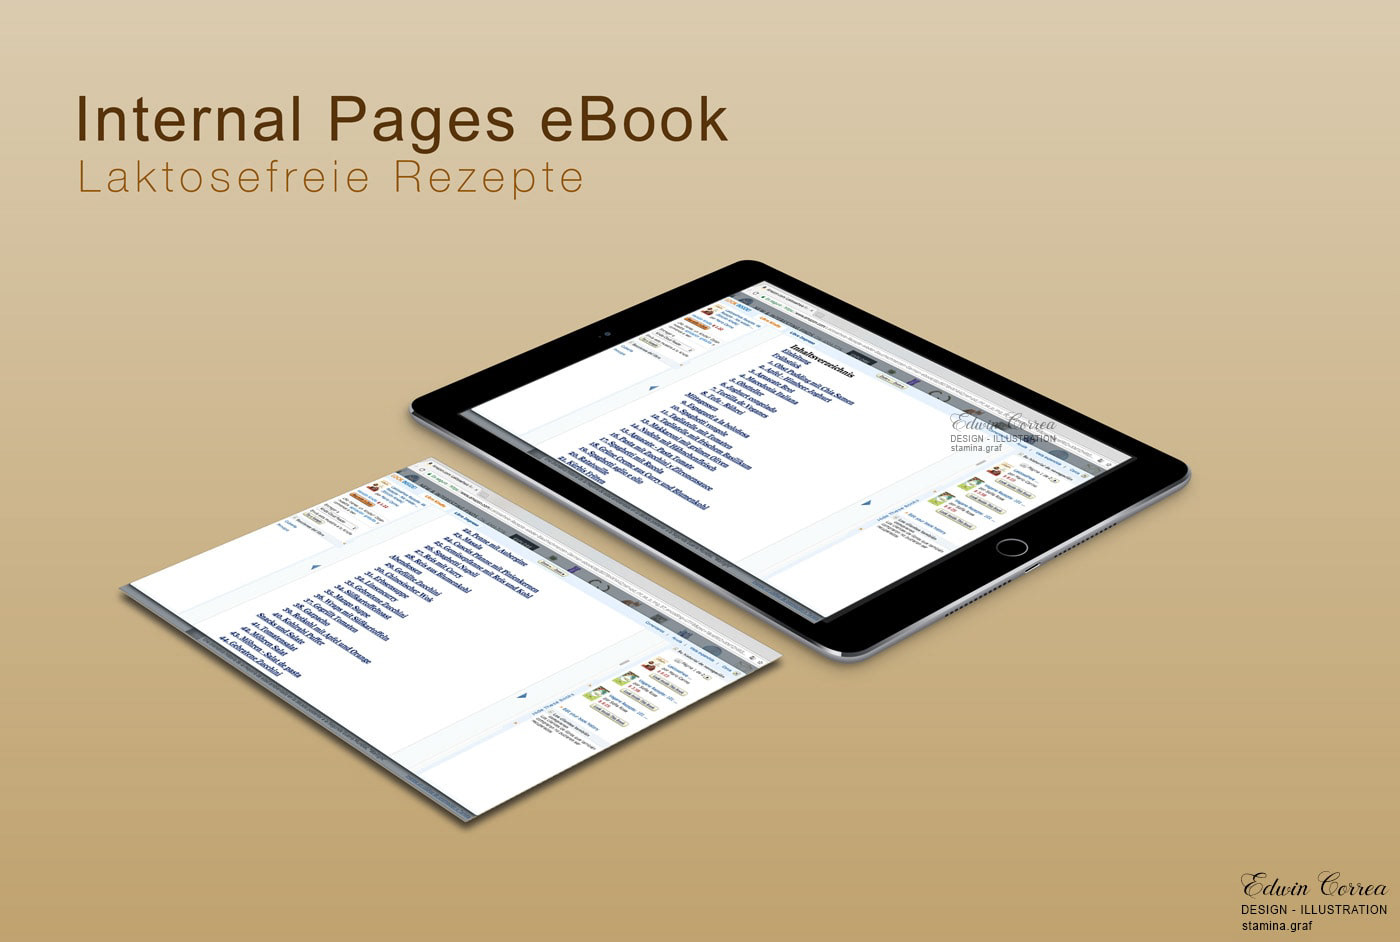 edwin correa dieta eBook design receta leche aleman libro ilustracion diseño gráfico cover design libro cocina diseño ilustración